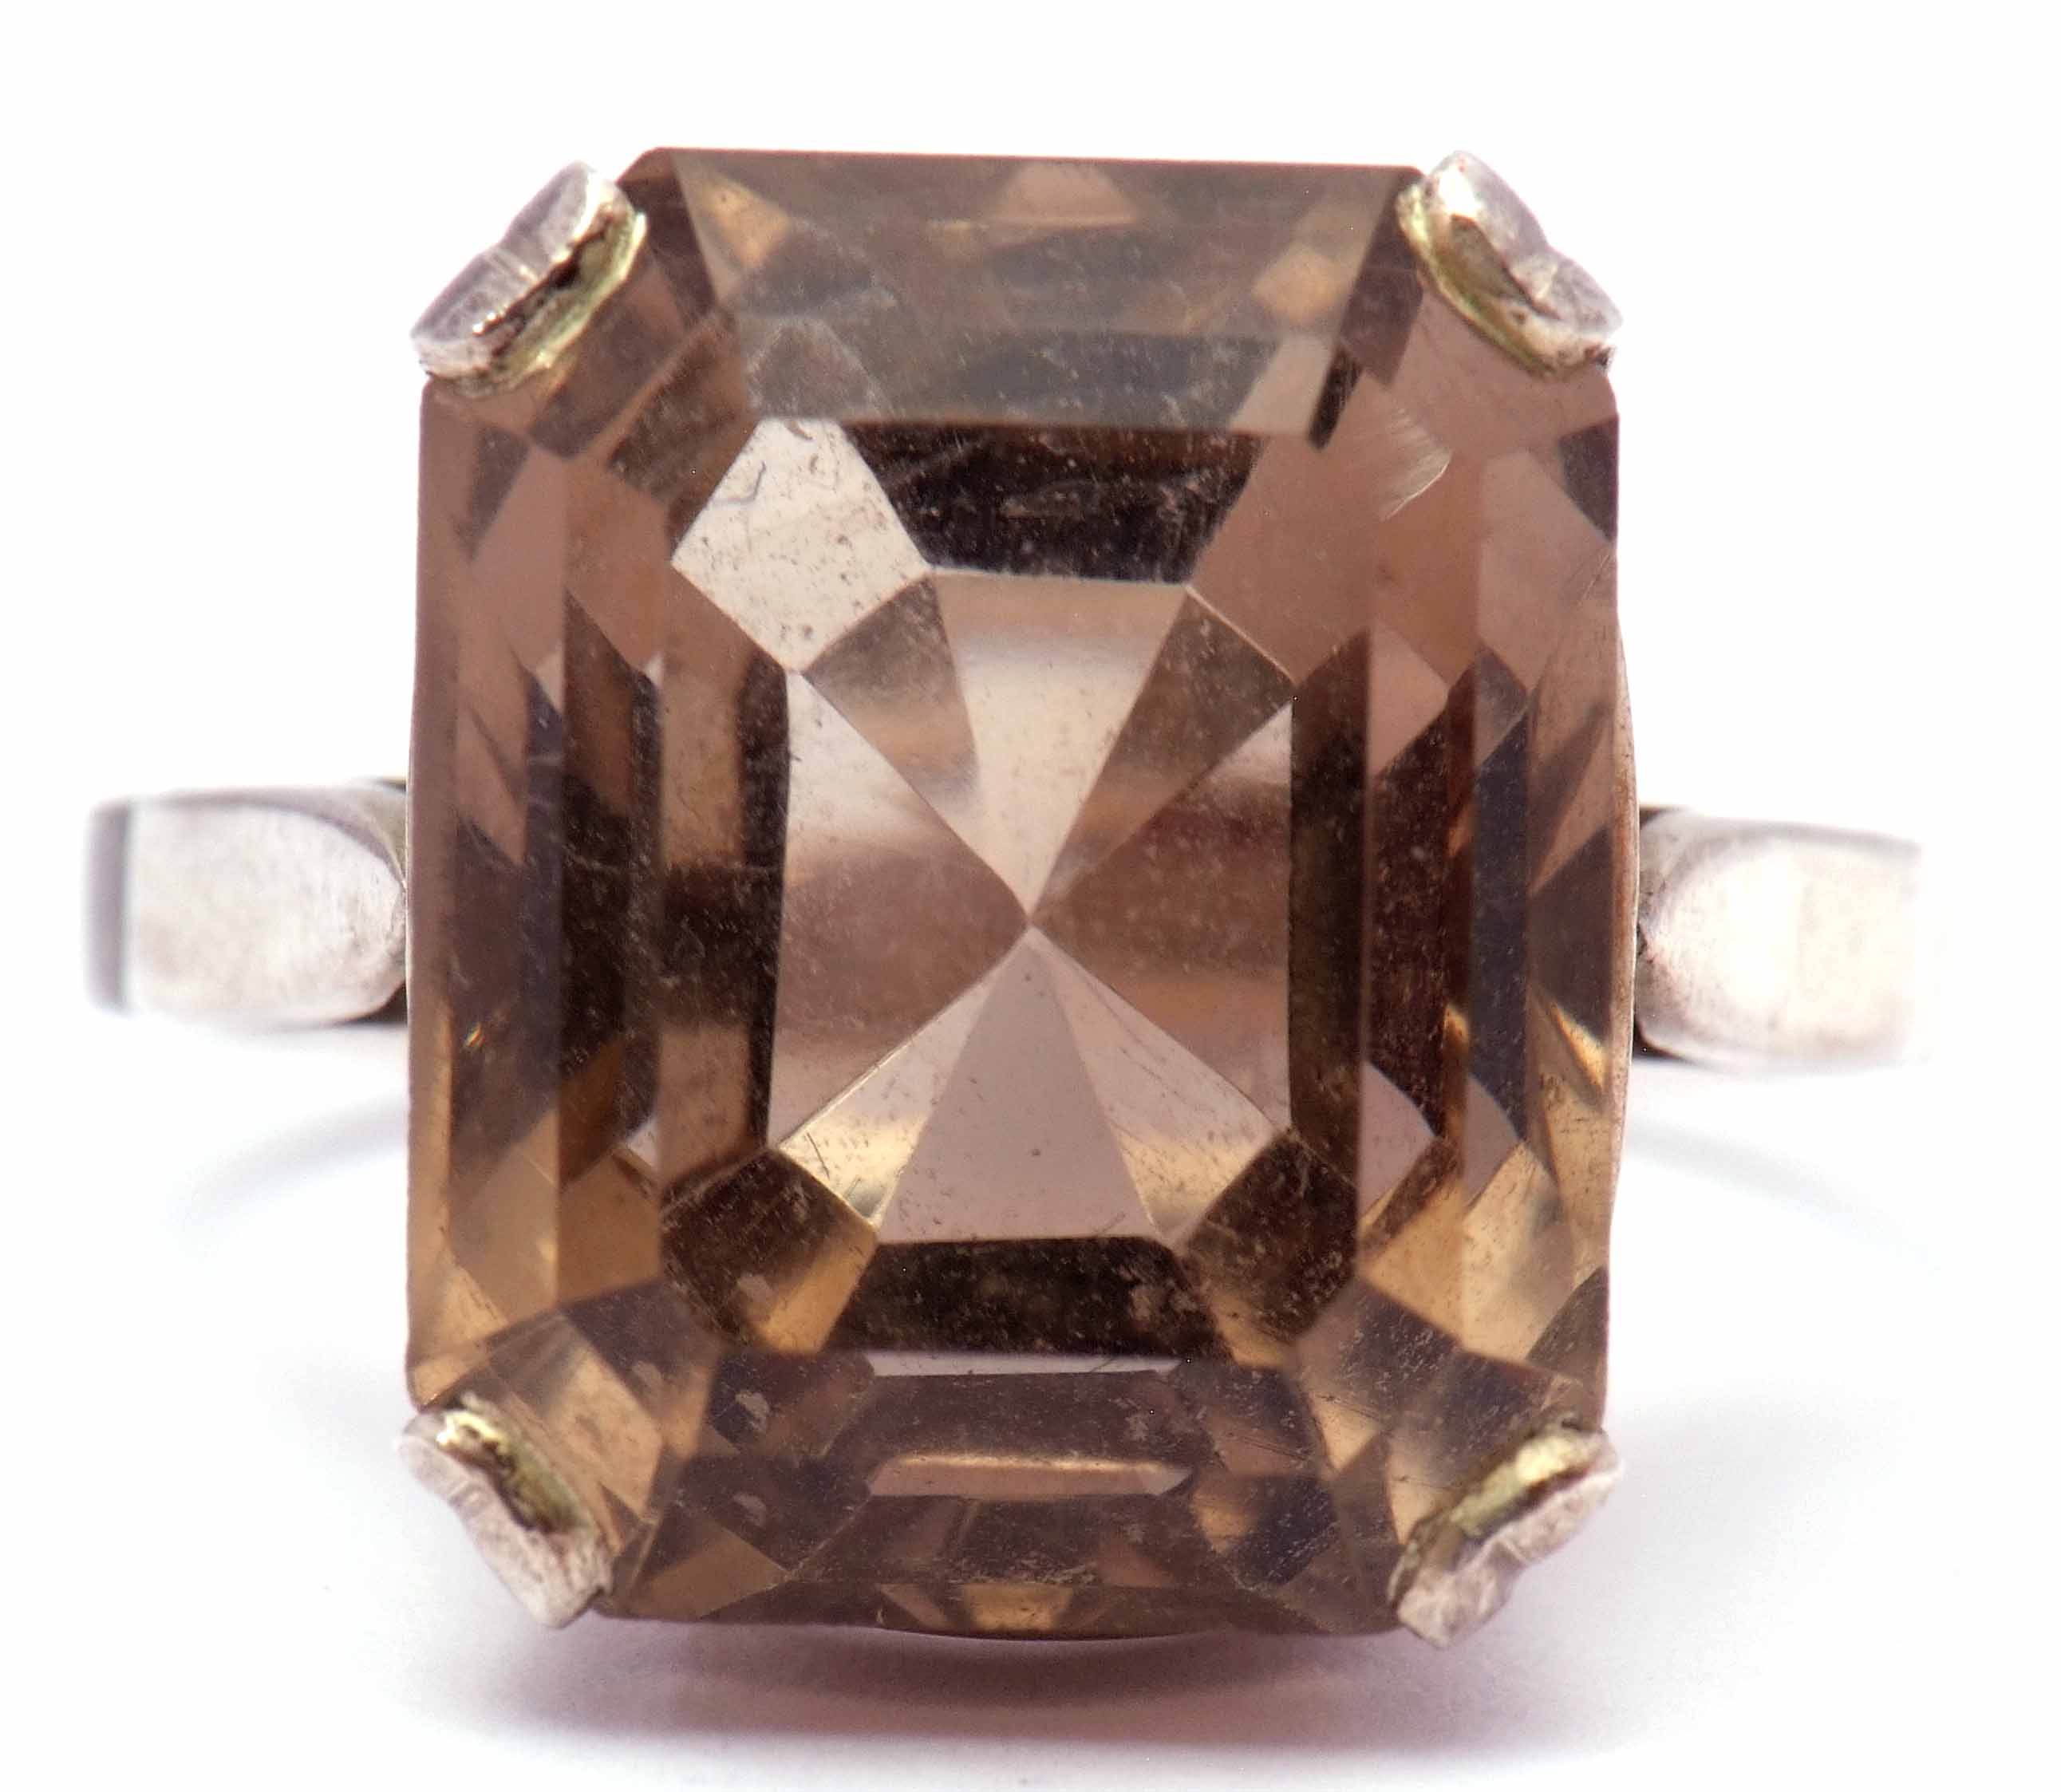 Modern stepped cut quartz dress ring raised in a pierced box white metal mount, size M